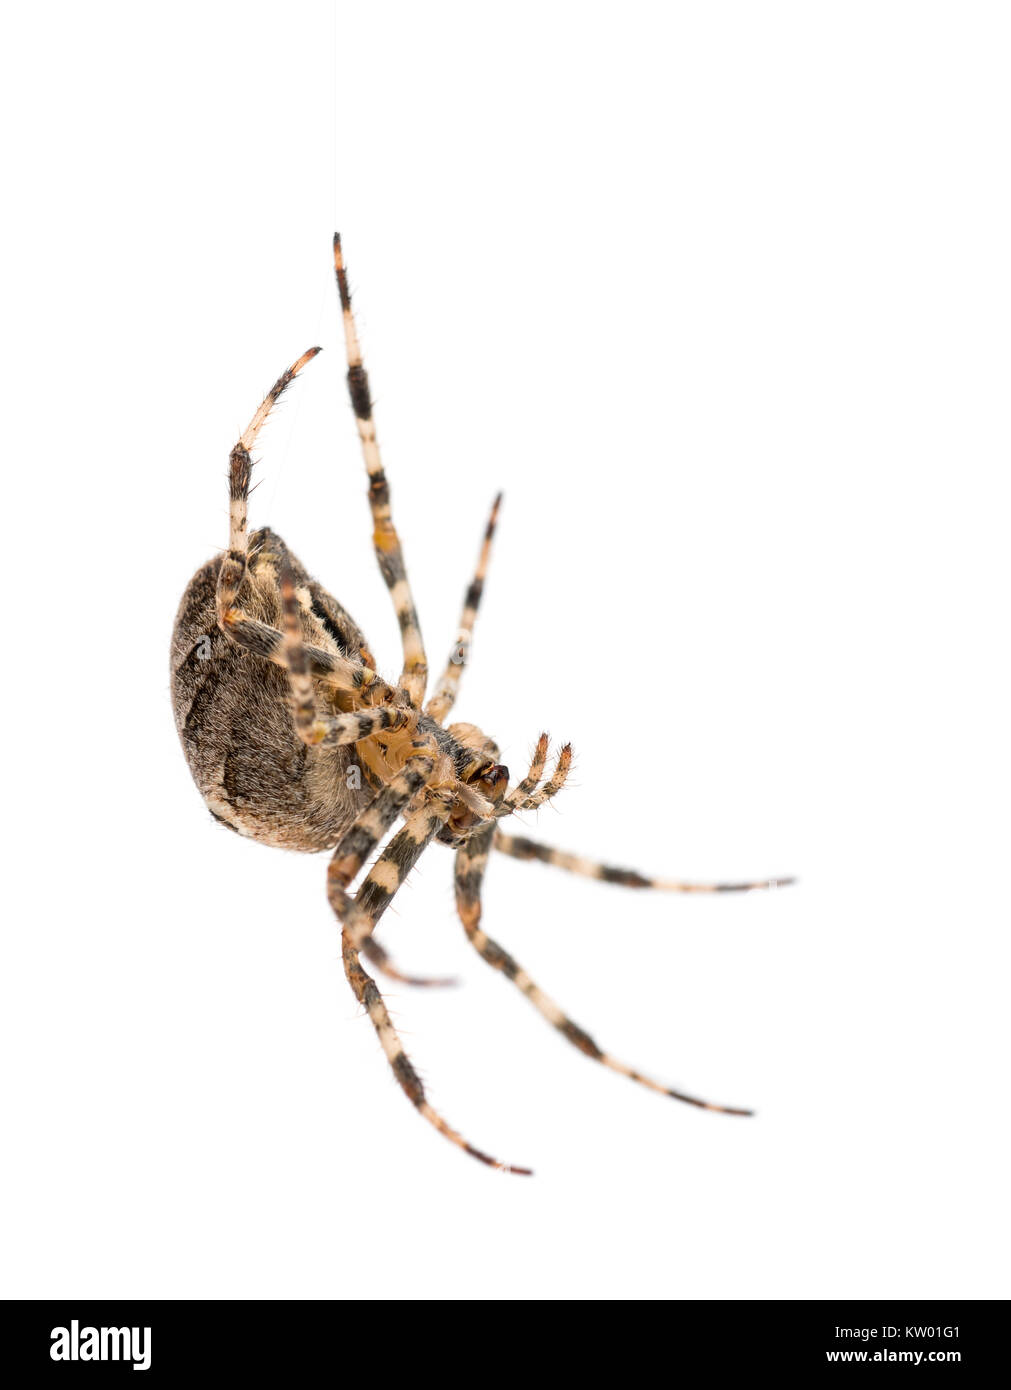 European garden spider, Araneus diadematus, hanging on silk string against white background Stock Photo